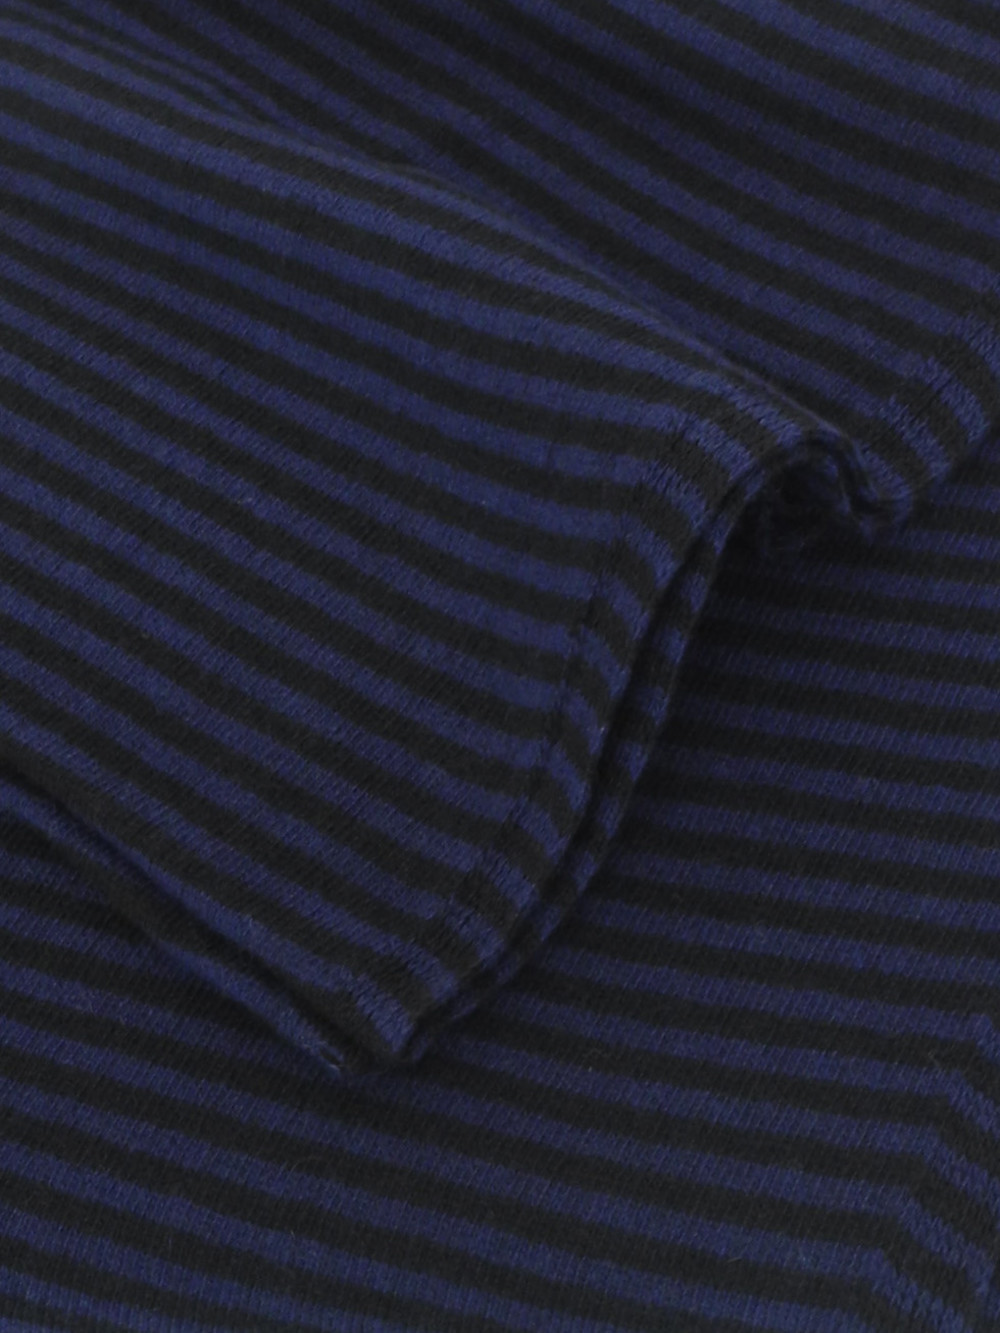 C.O.S.Y by SjaalMania Travel Wrap Cosy Chic Stripes Solid Black / Navy